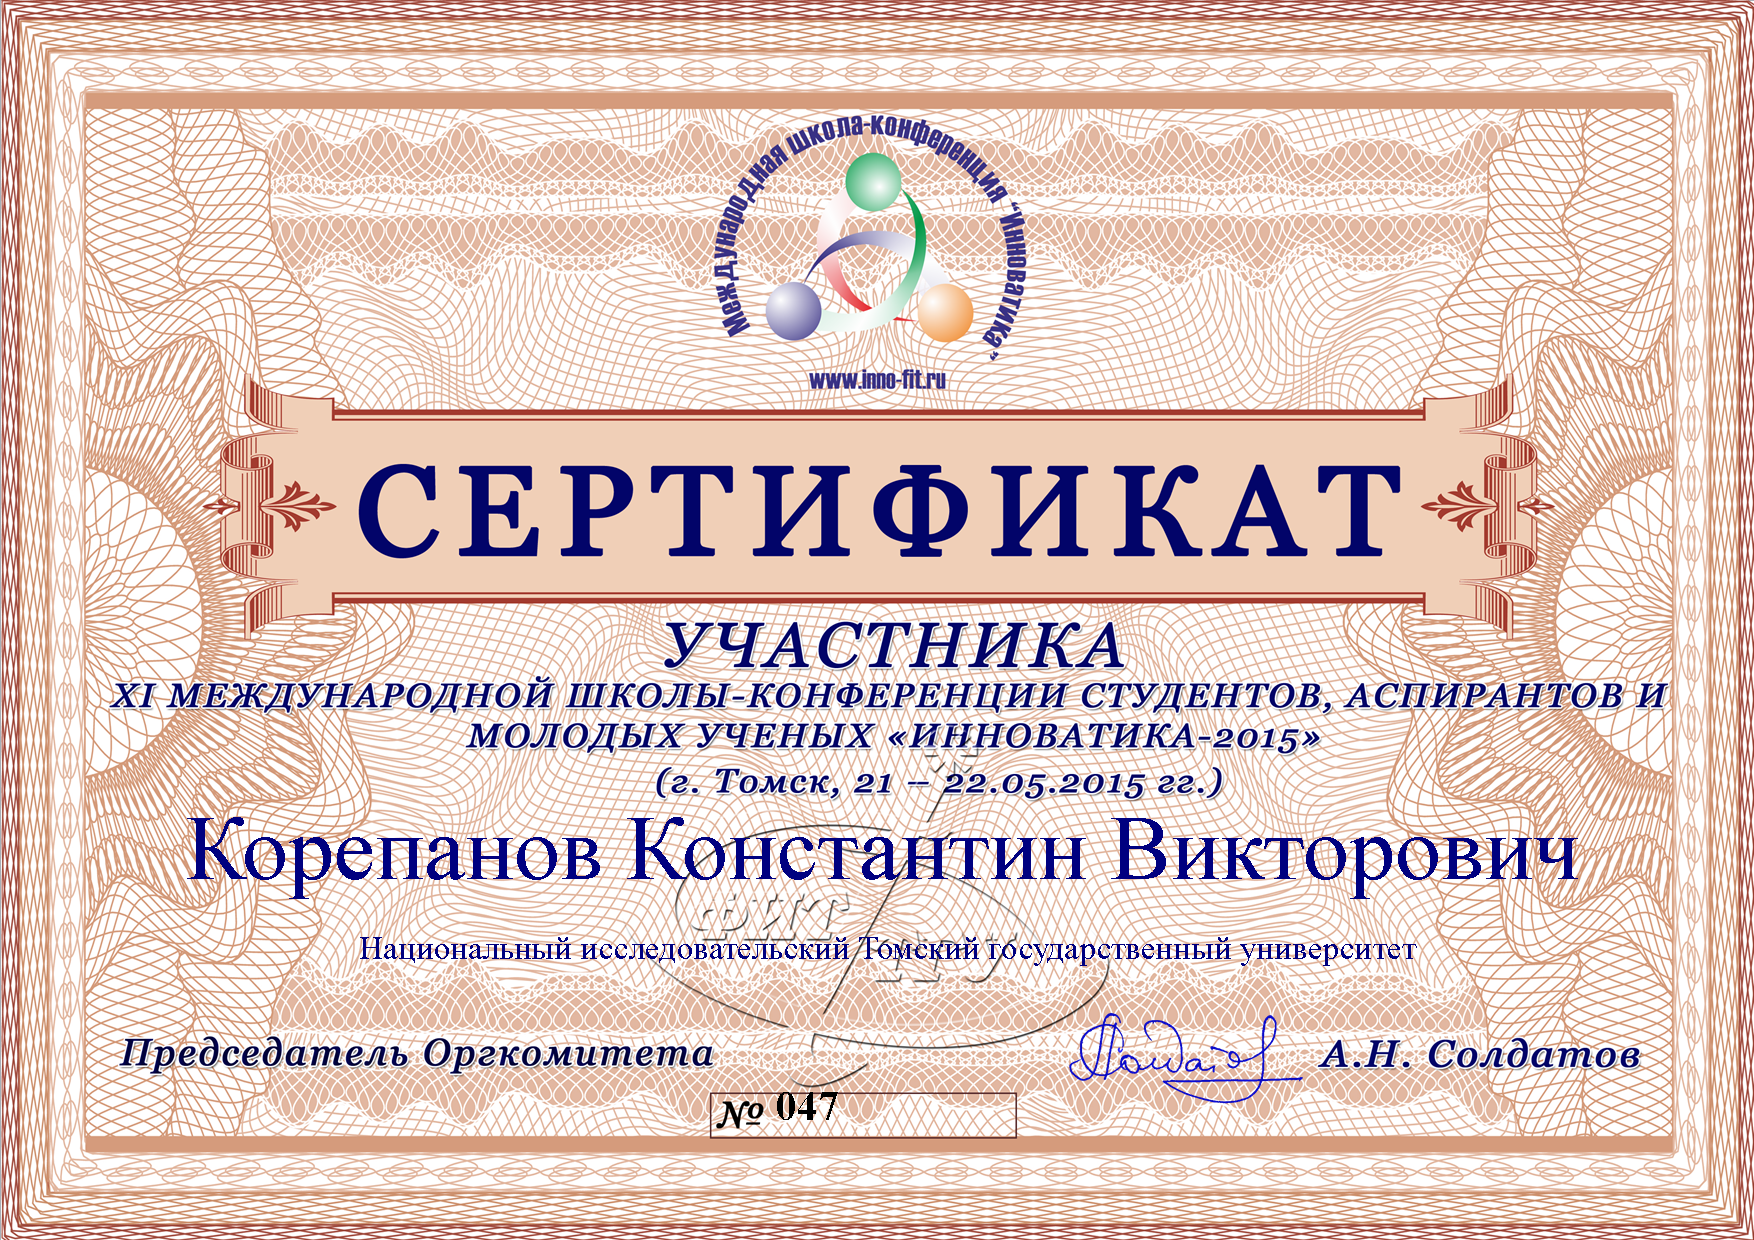 Сертификат Корепанова Константина